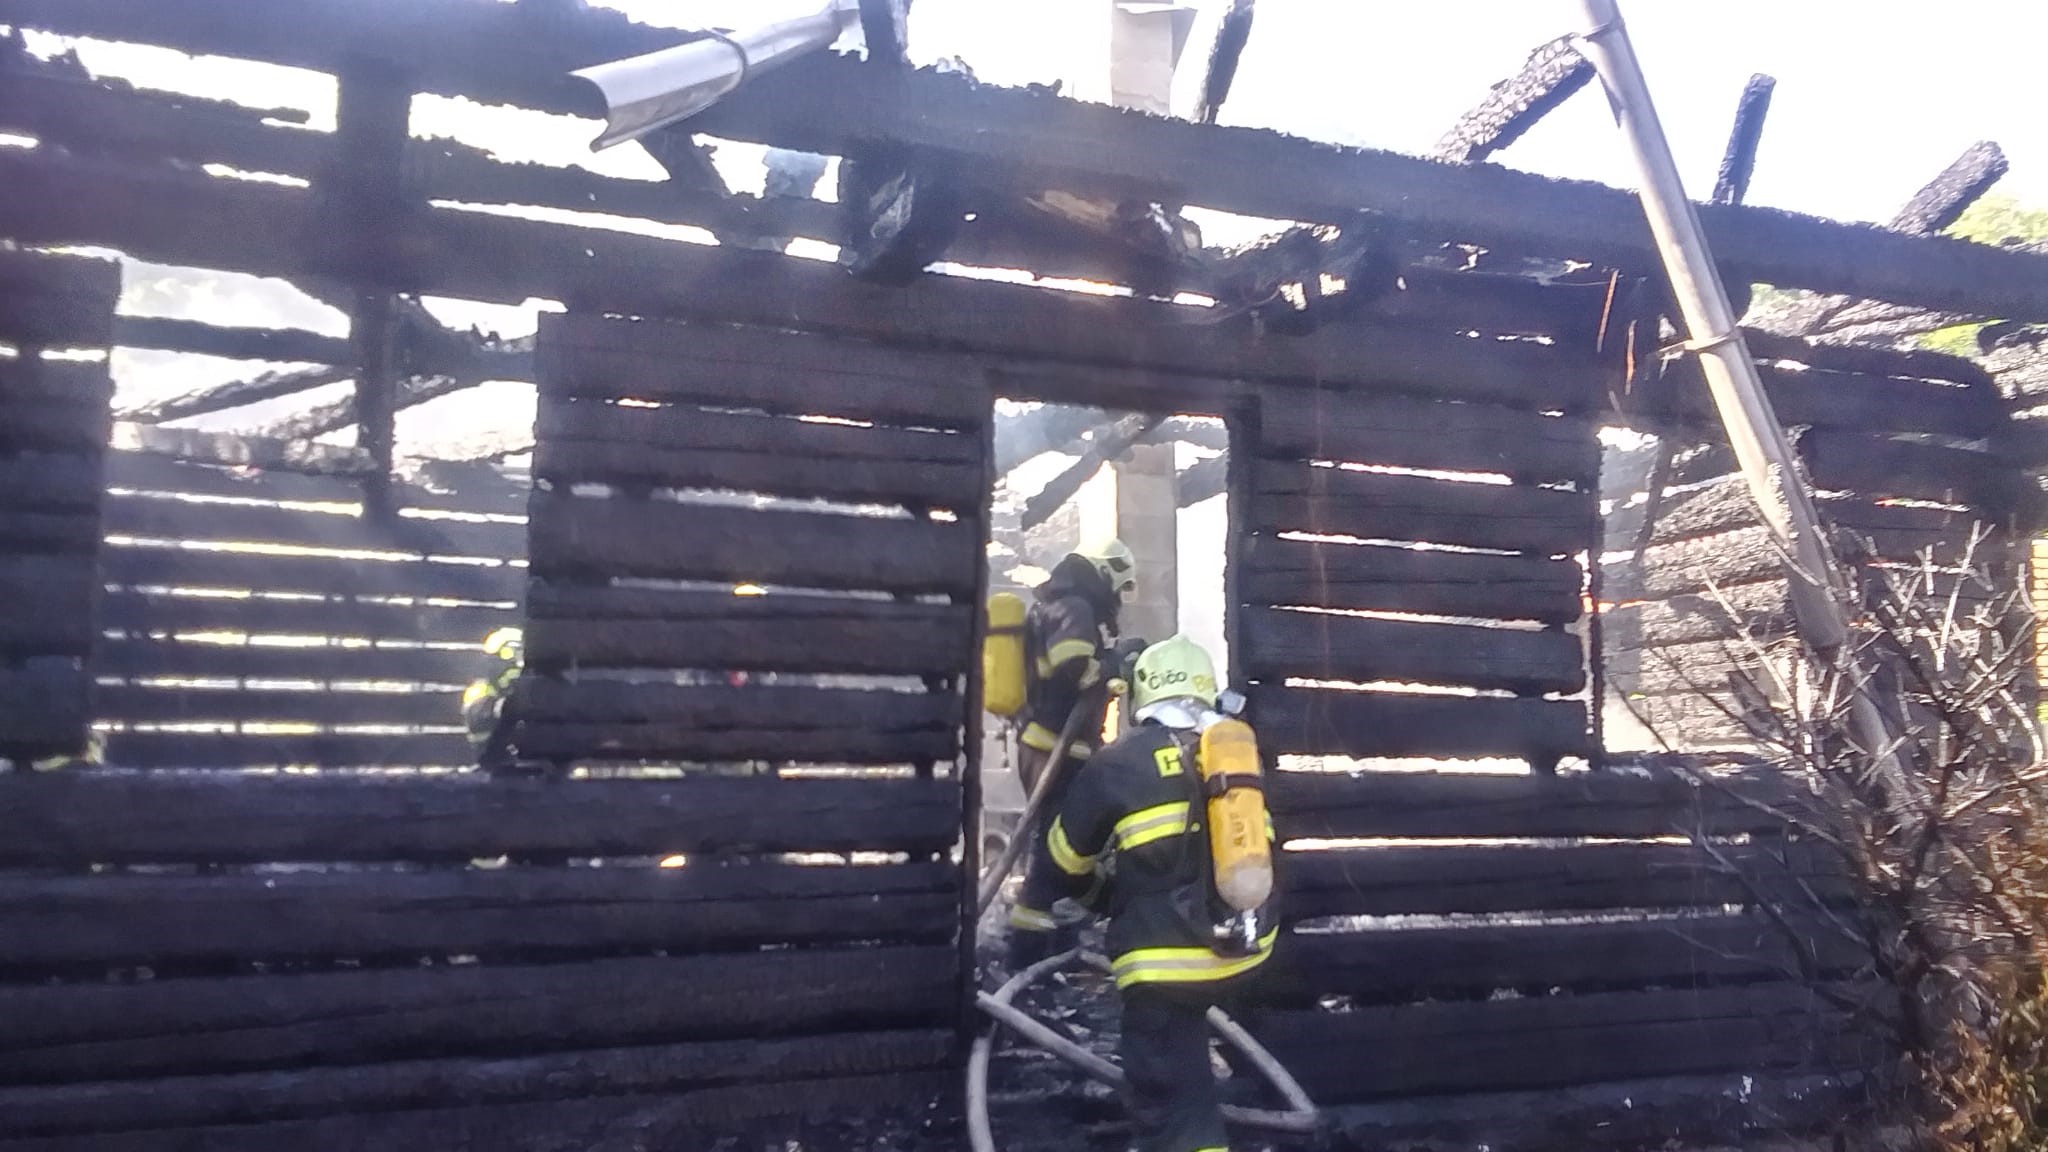 02 - Požiar chatiek vo Svätom Jure, okres Pezinok